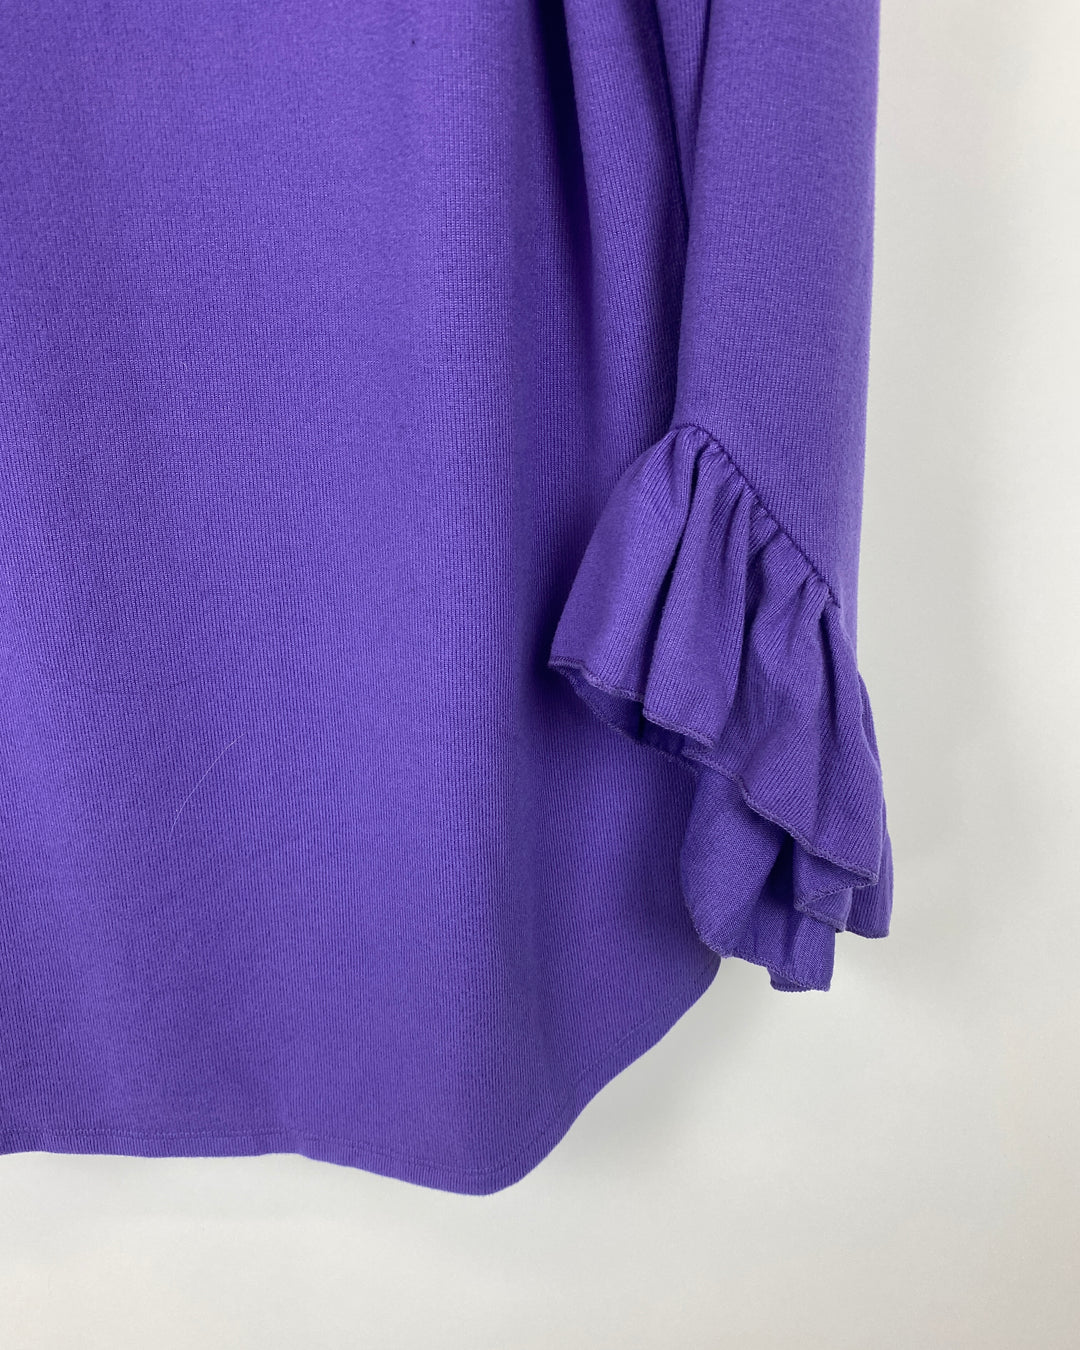 Purple Ruffled Sleeve Top - Small/Medium